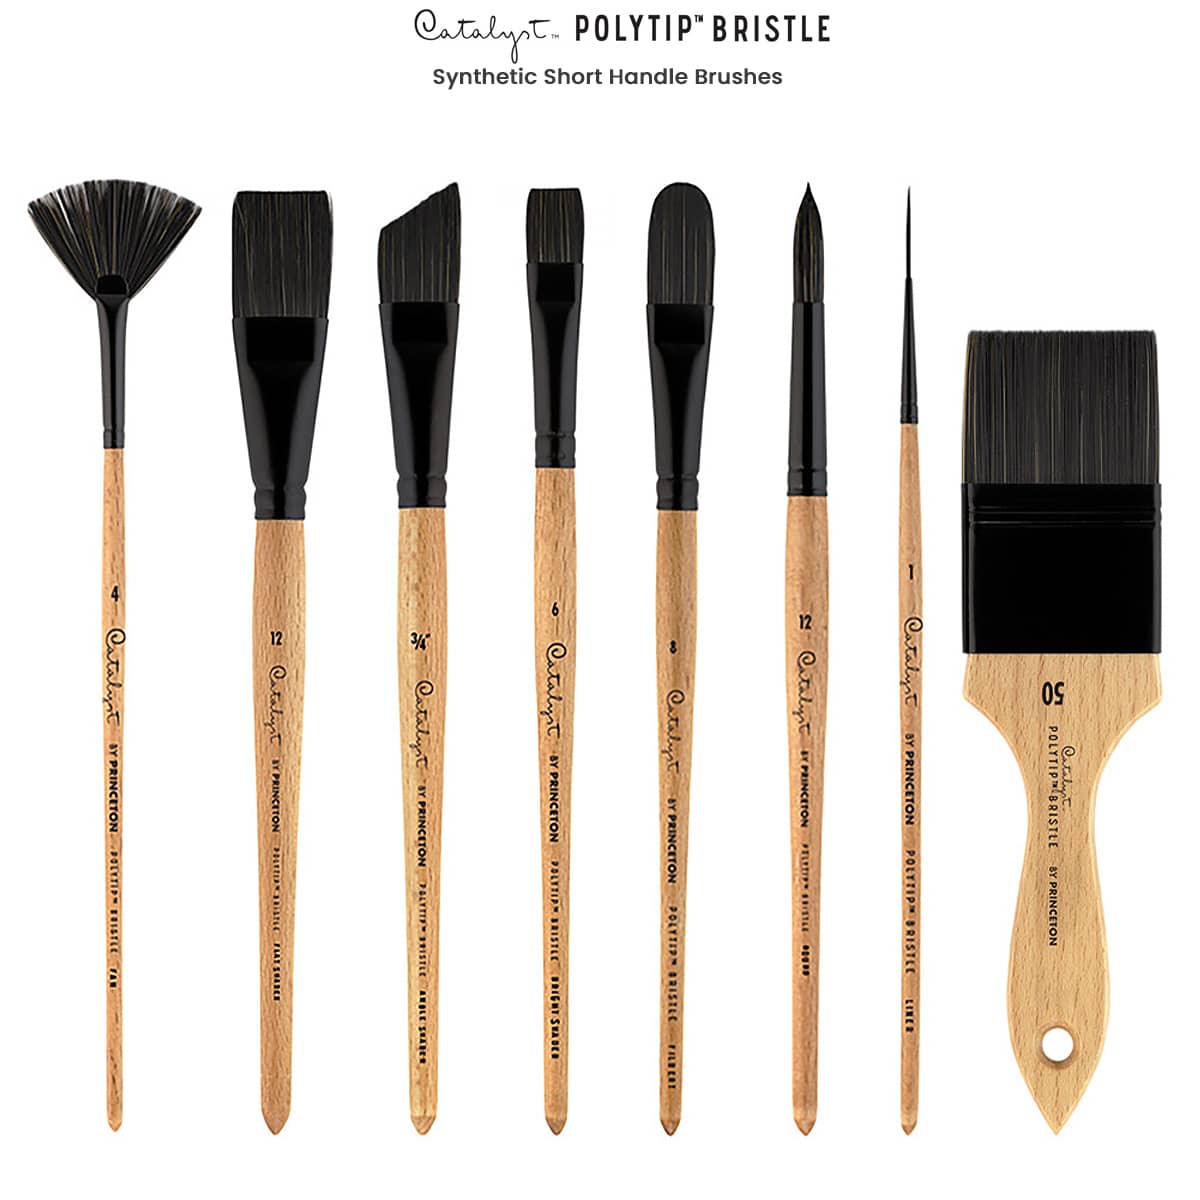 Princeton Catalyst Polytip Short Handle Brushes